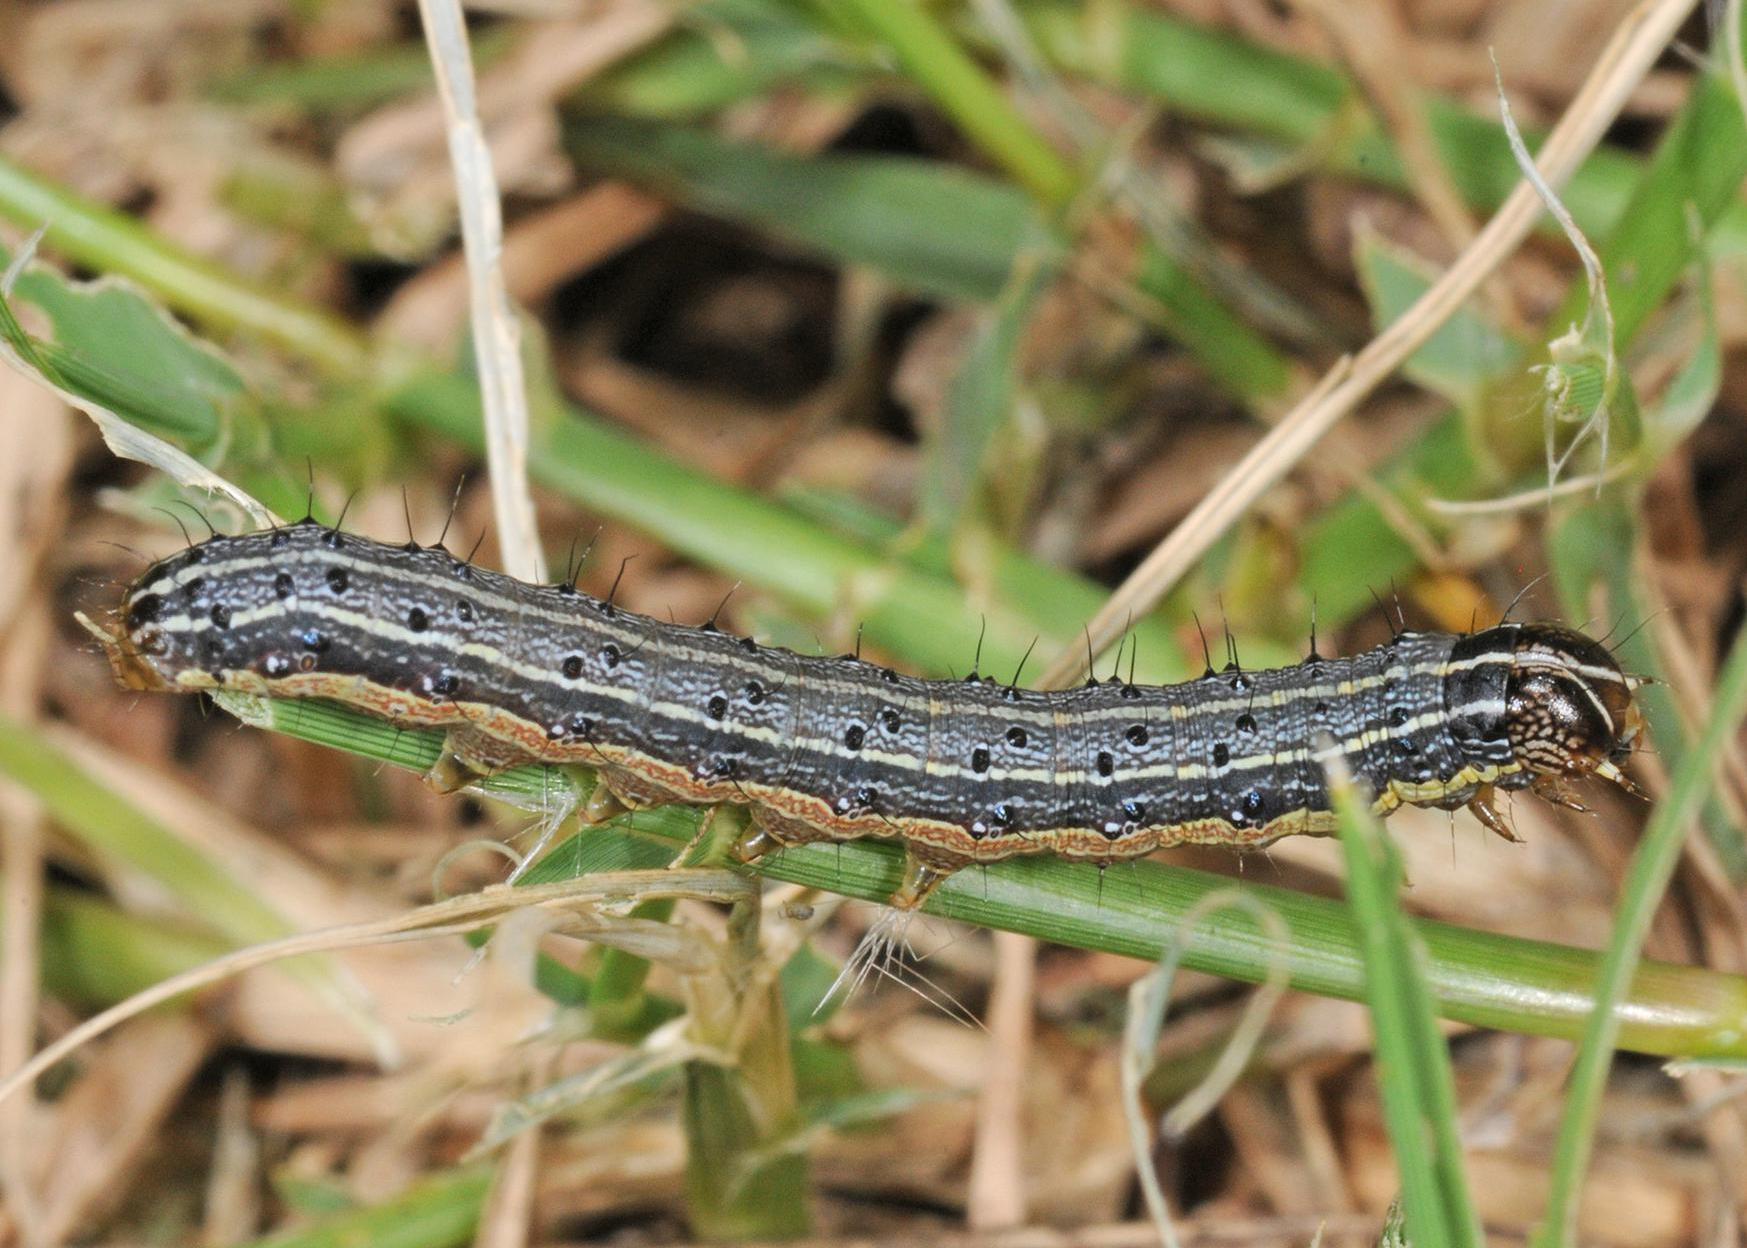 Closeup of an armyworm